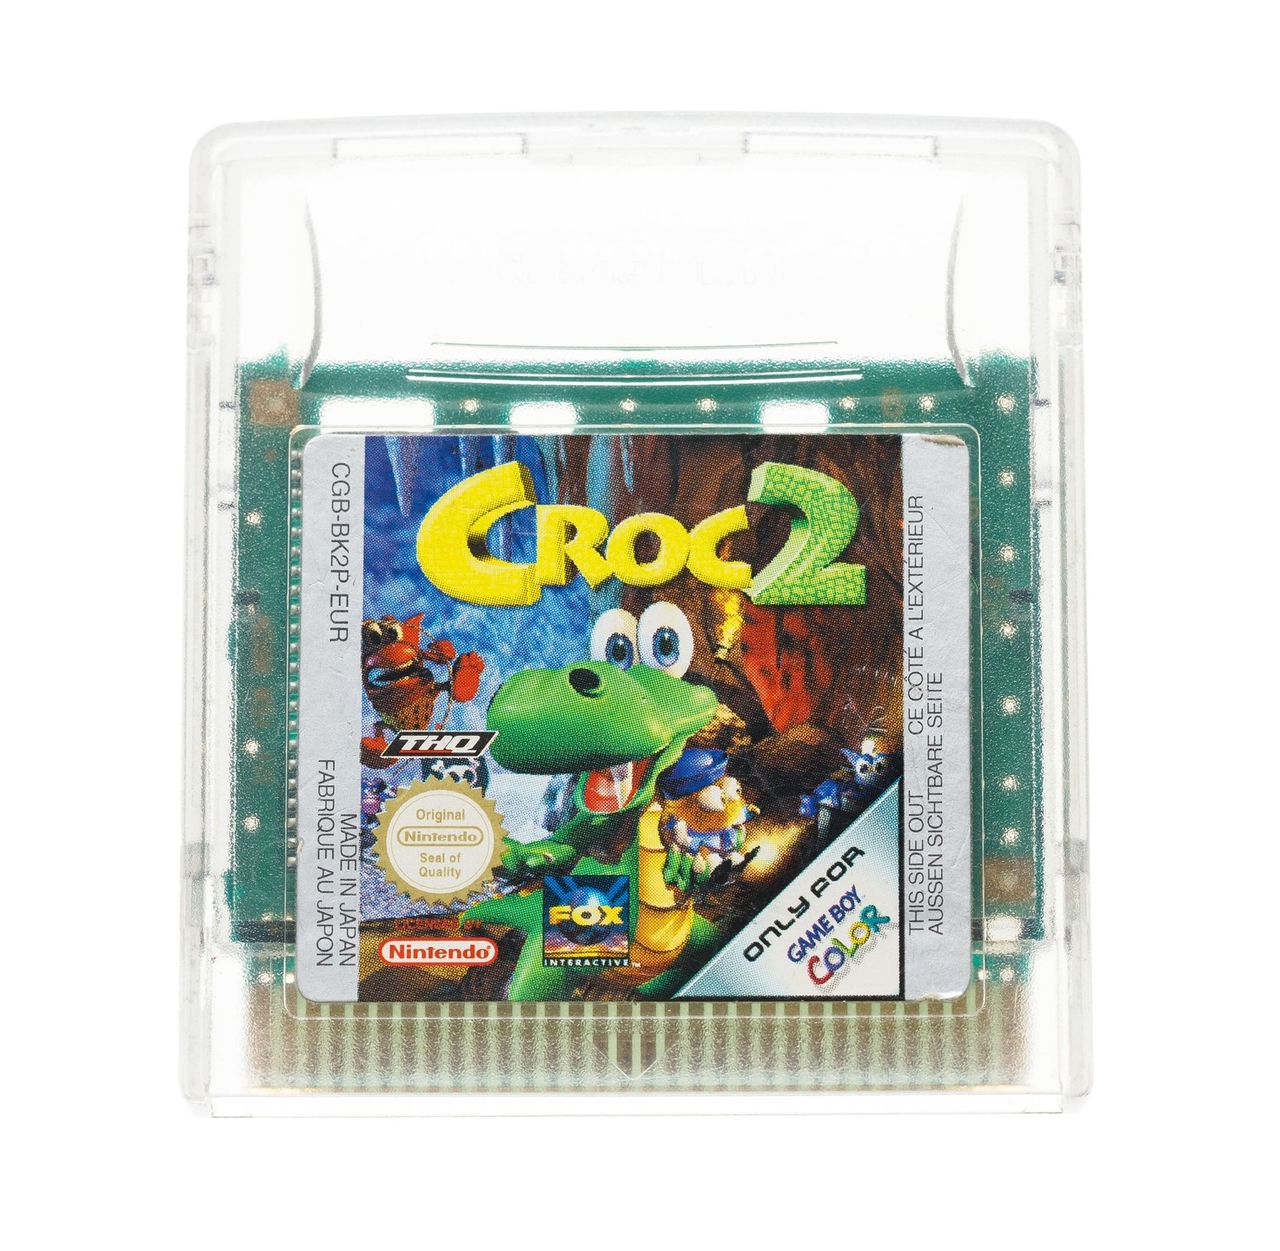 Croc 2 - Gameboy Color Games